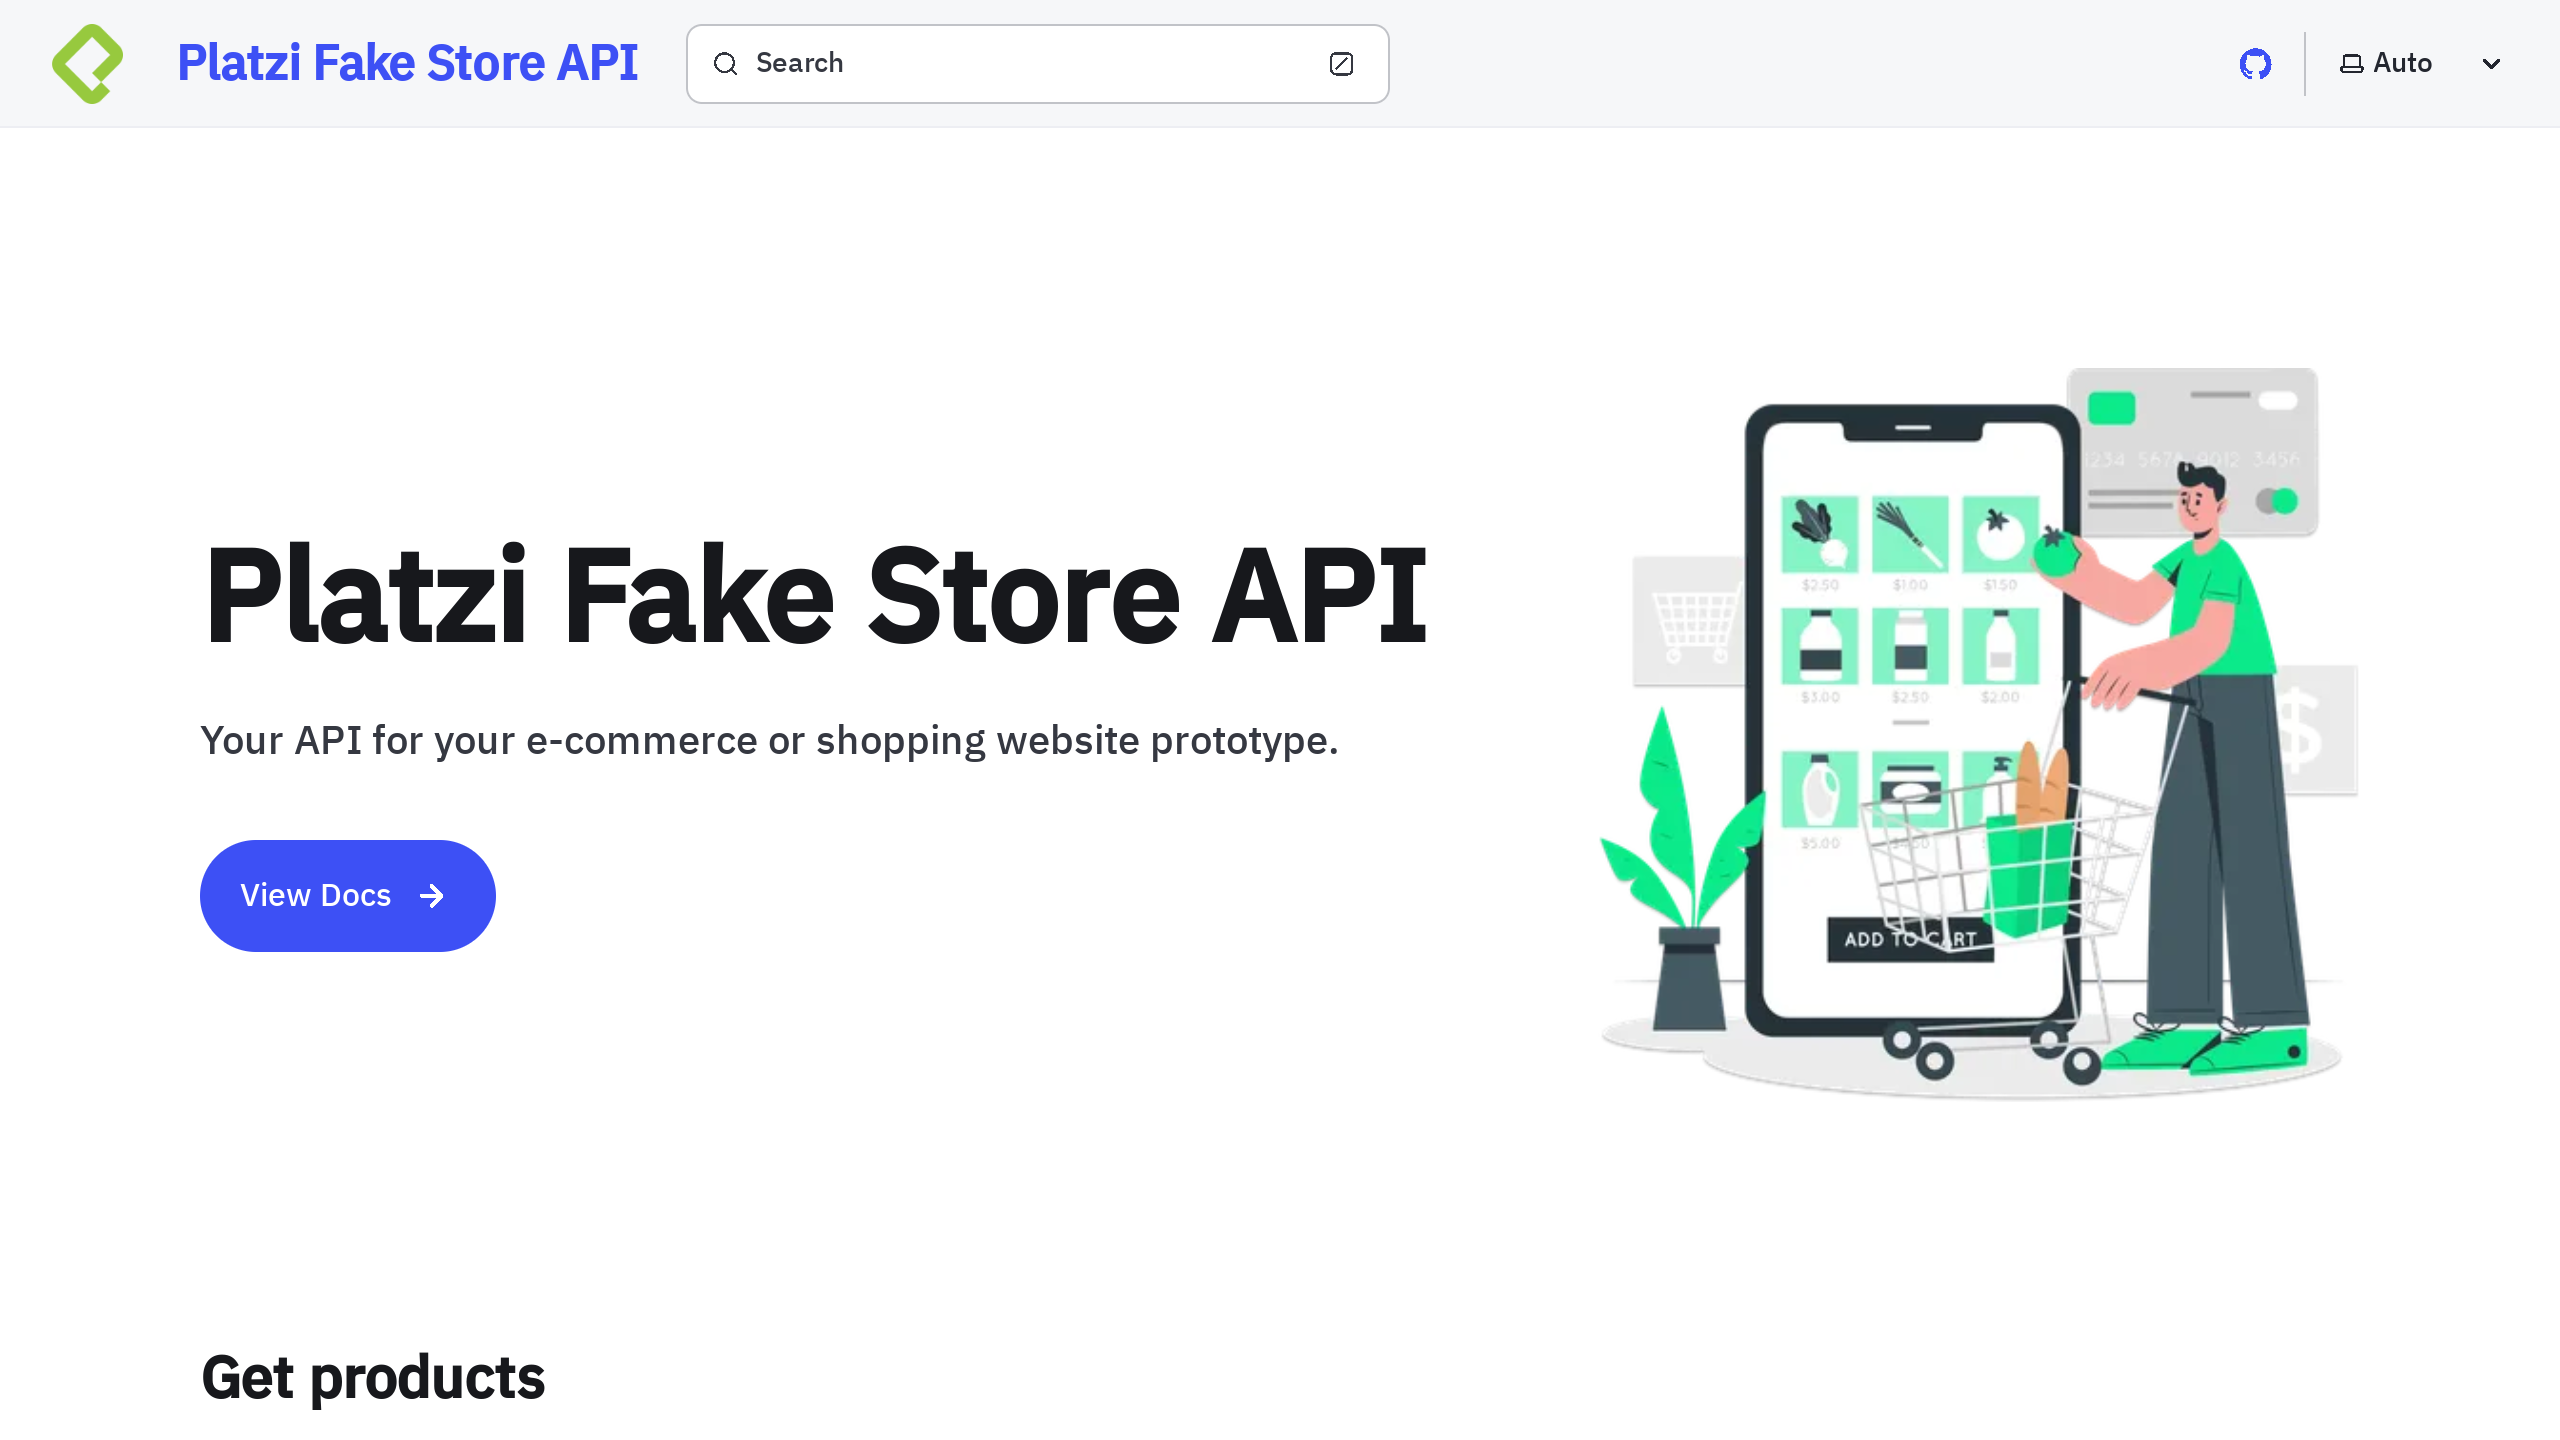 Platzi Fake Store's website screenshot